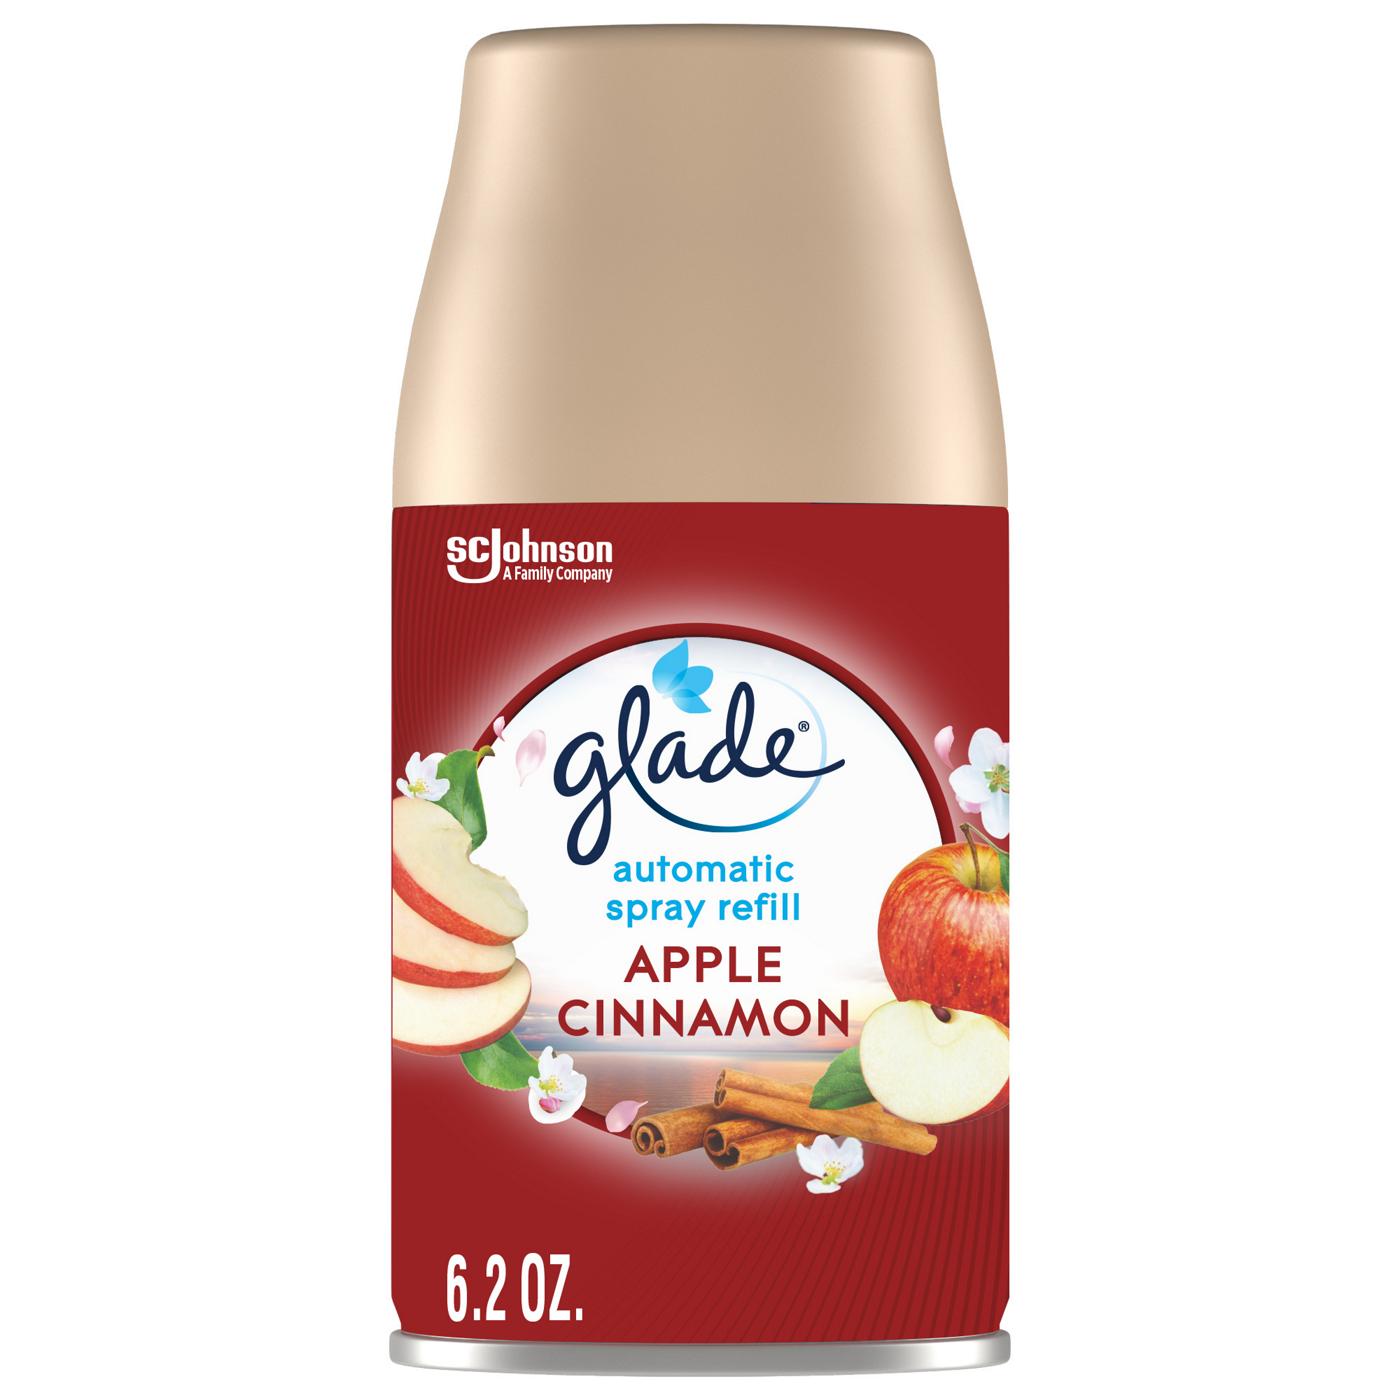 Glade Automatic Spray Refill - Apple Cinnamon; image 1 of 2